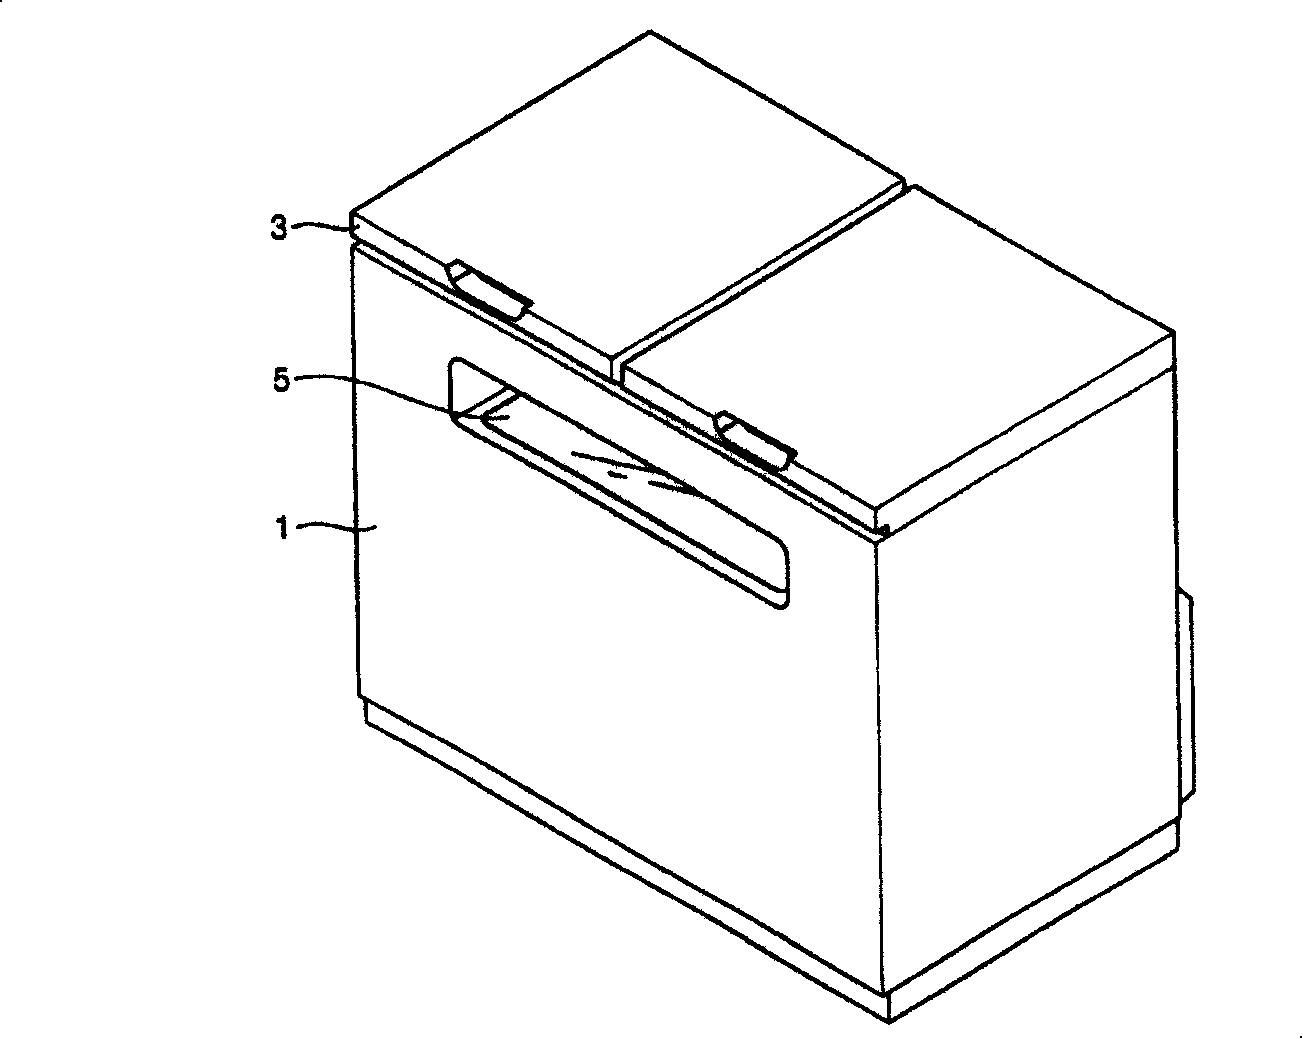 Display device of kraut refrigerator